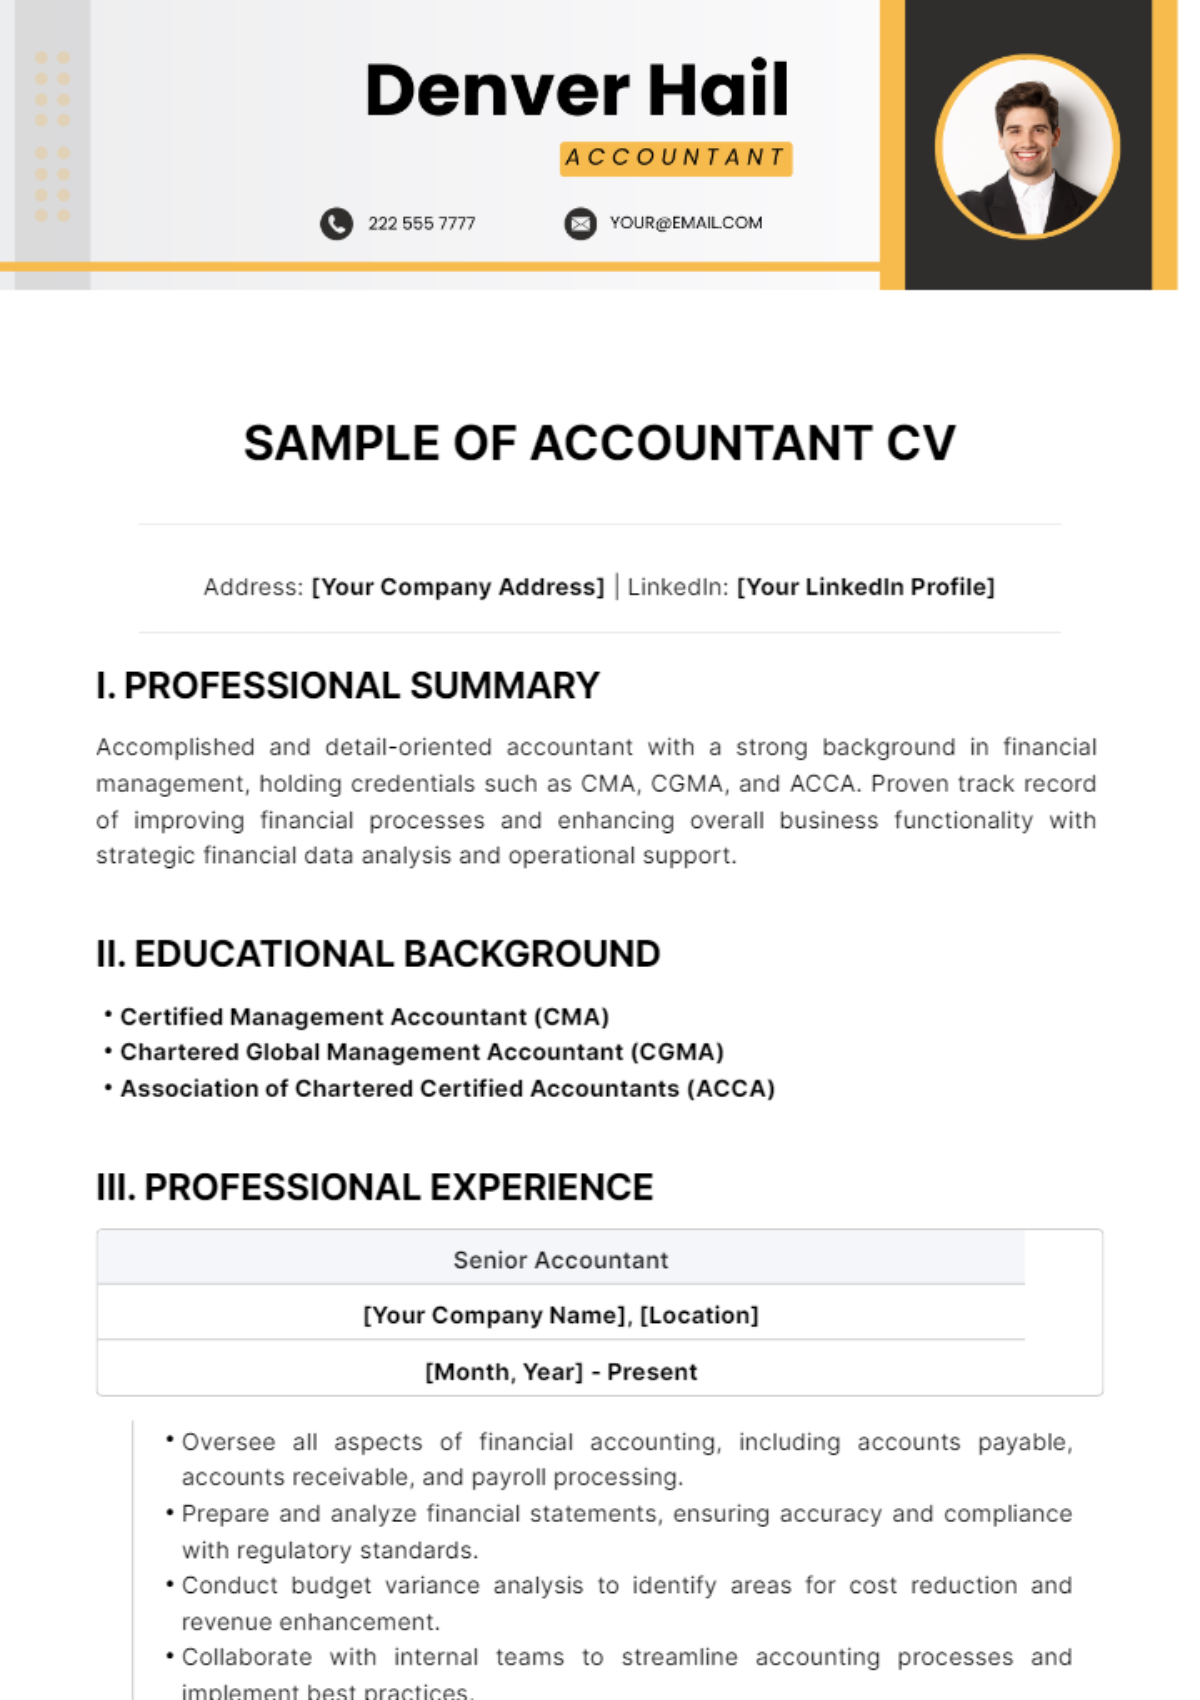 Sample of Accountant CV Template